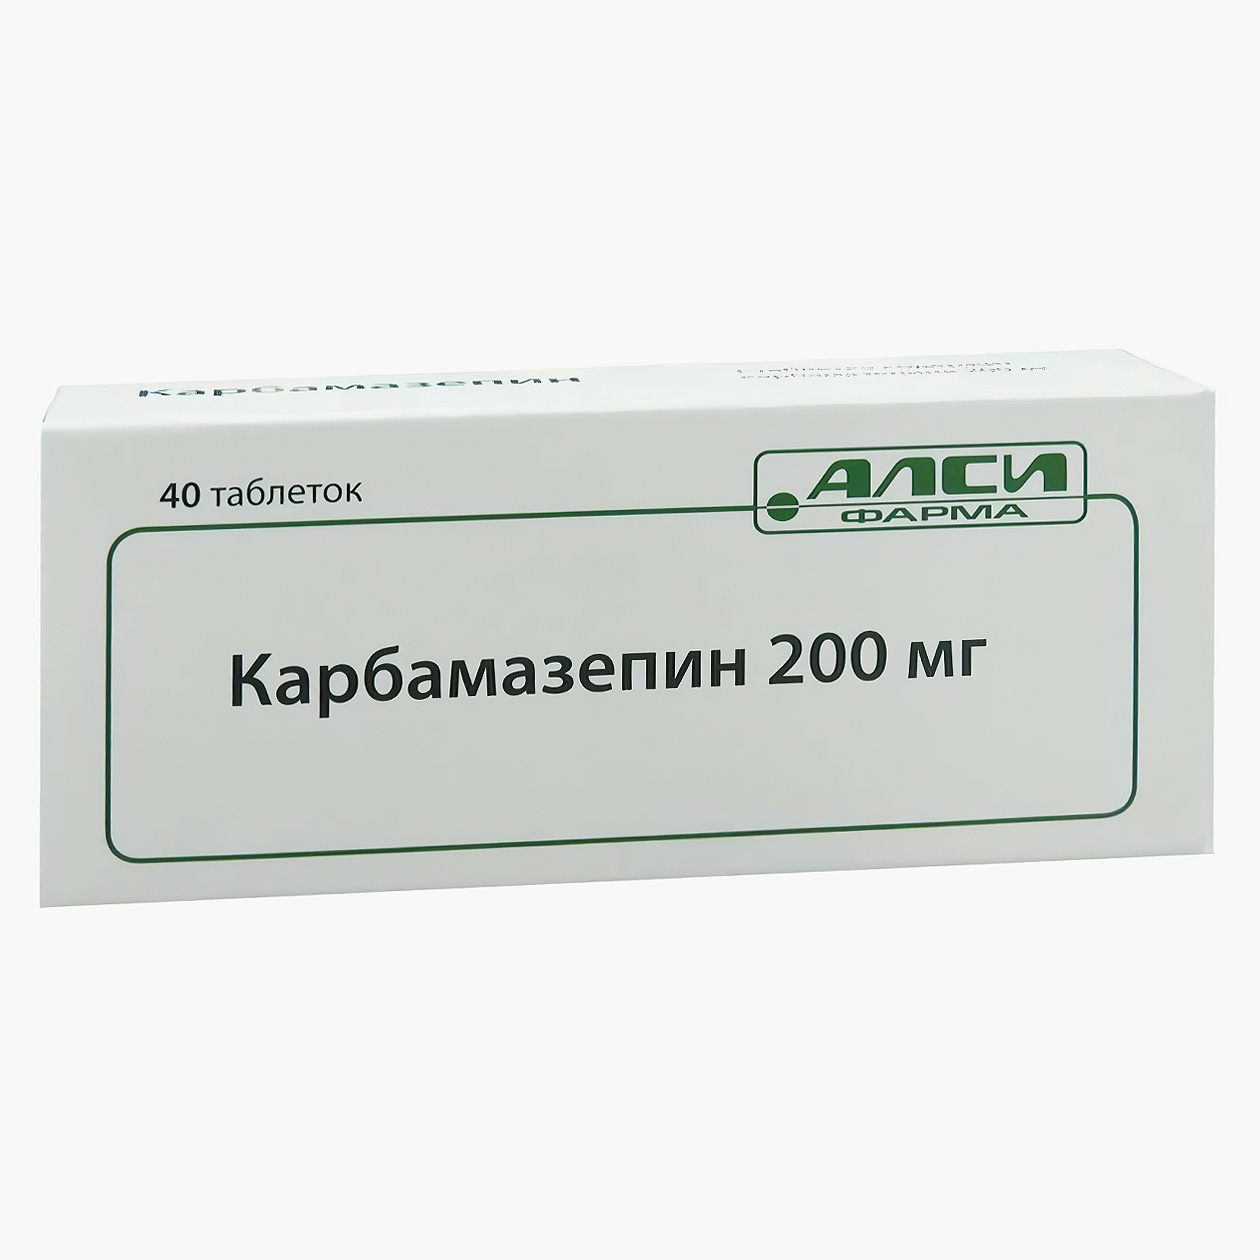 Стоимость упаковки зависит от количества таблеток и ценовой политики производителя. Цена за 40 таблеток — от 130 ₽. Источник: asna.ru